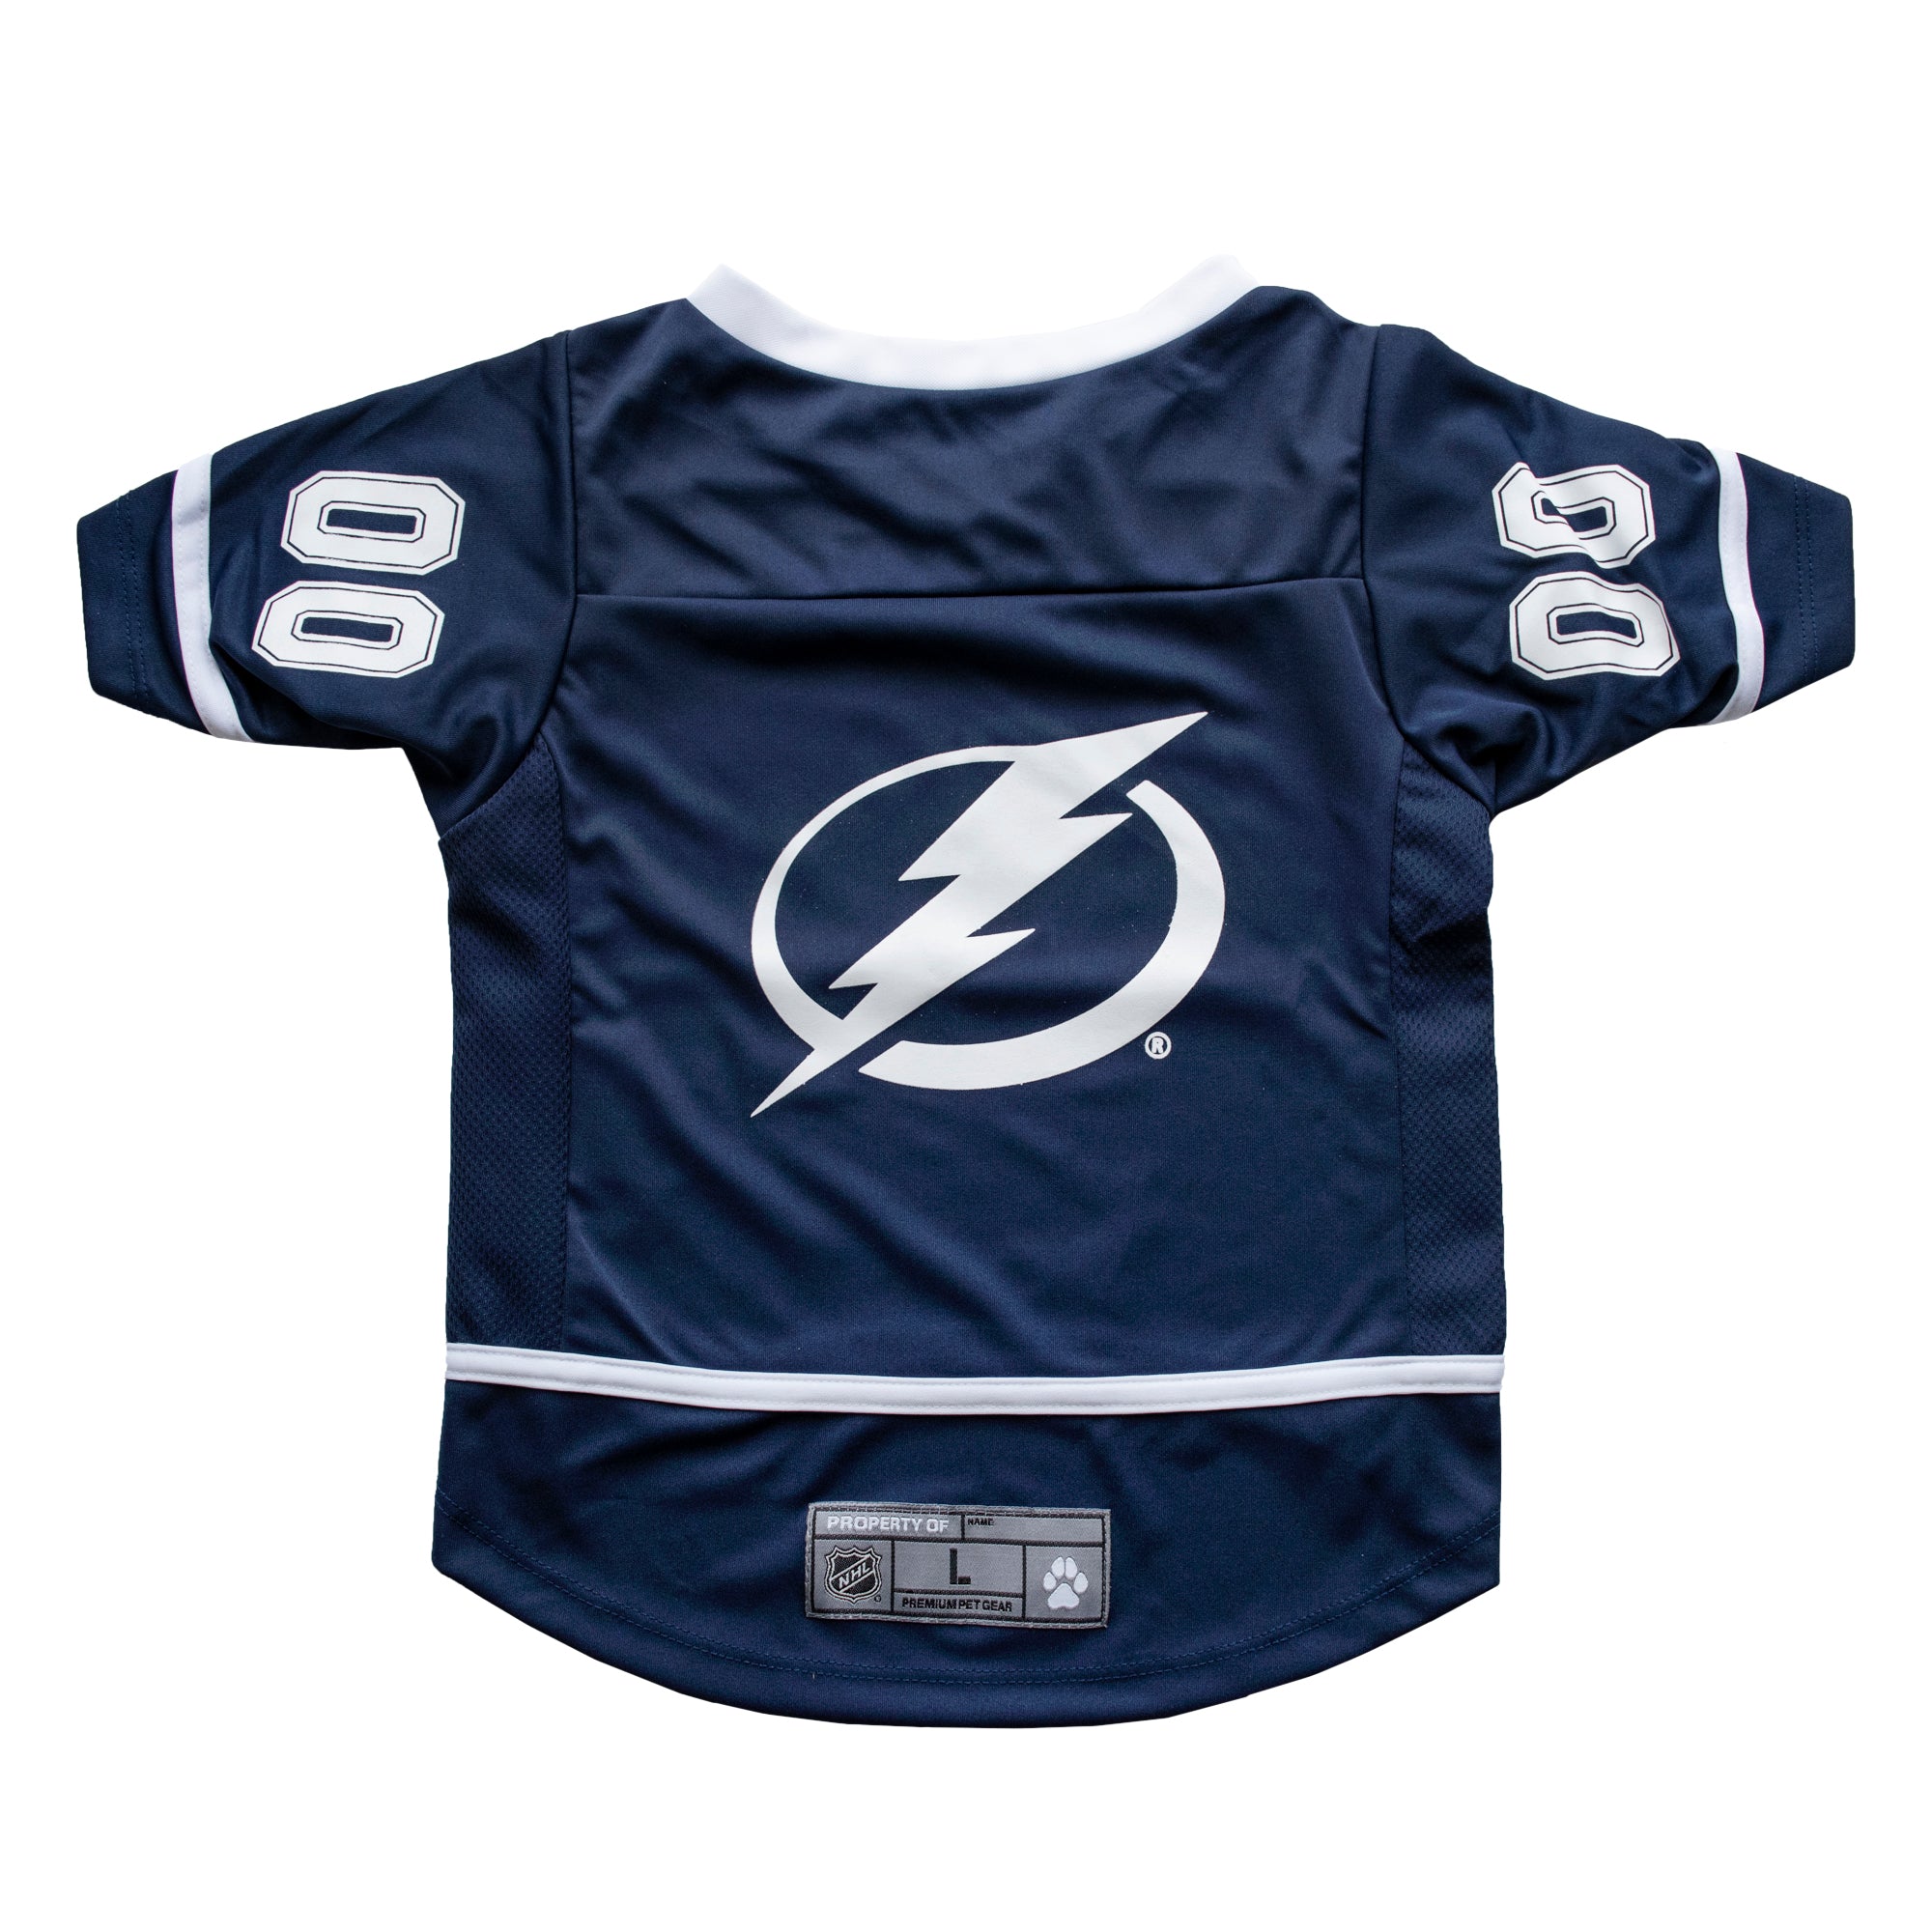 NHL Tampa Bay Lightning Jersey - XL